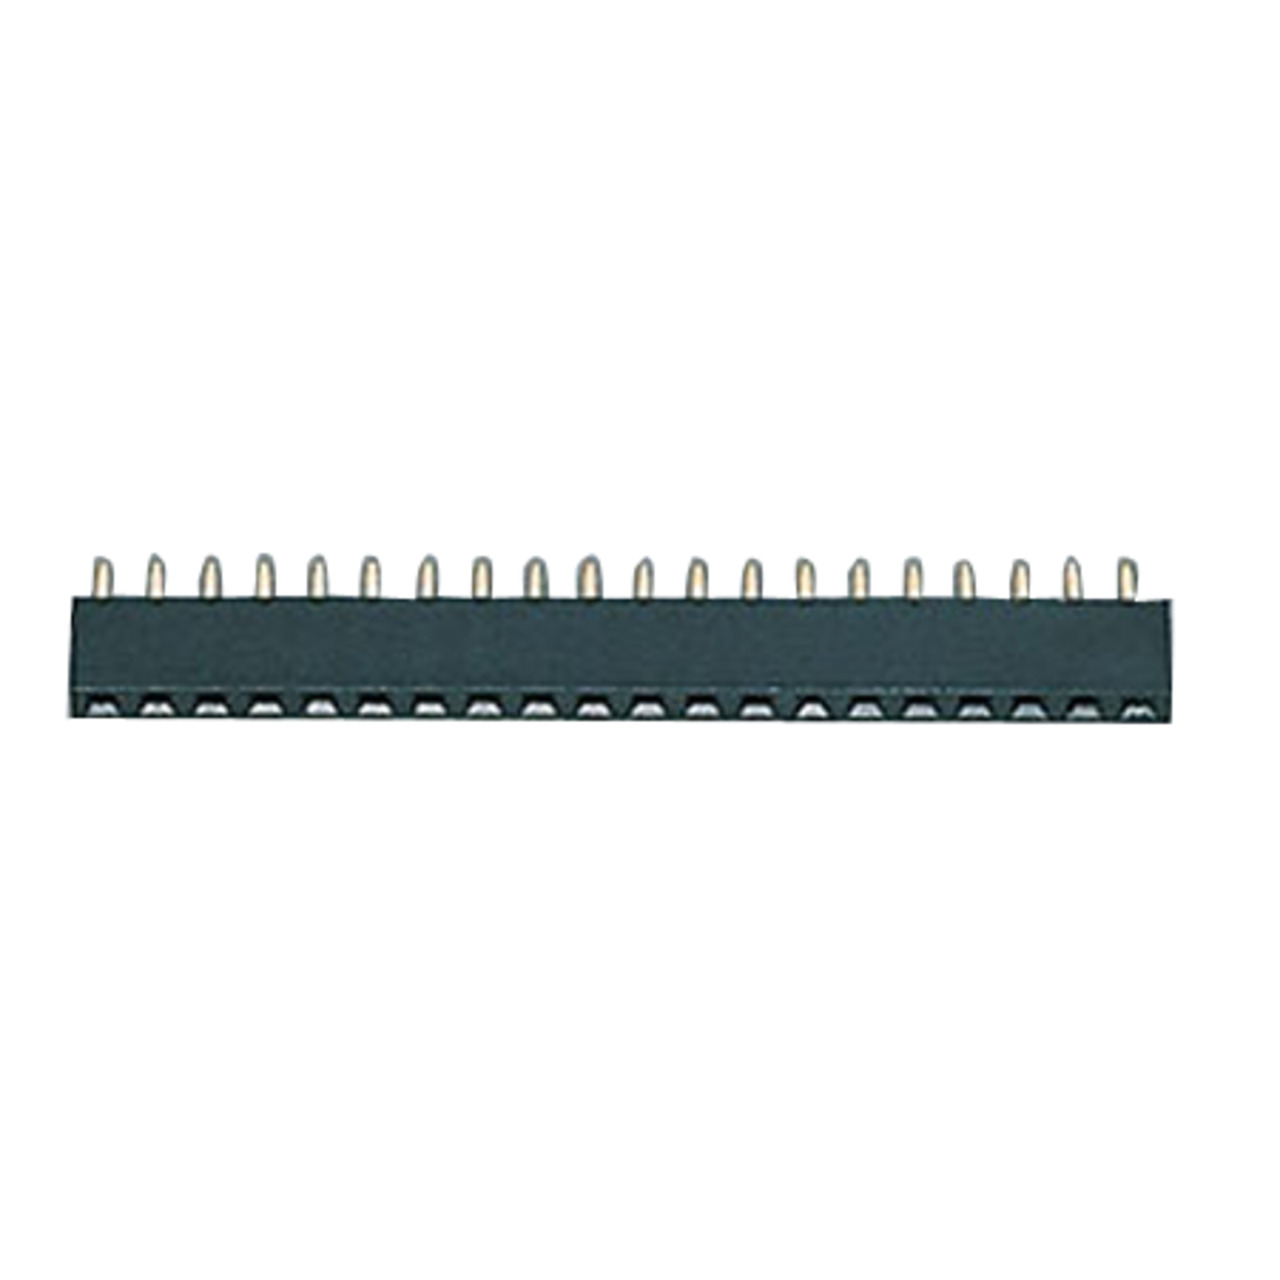 Buchsenleiste- 1x 32-polig- Körperhöhe 4-2 mm- gerade- trennbar- gedrehte Kontakte unter Komponenten